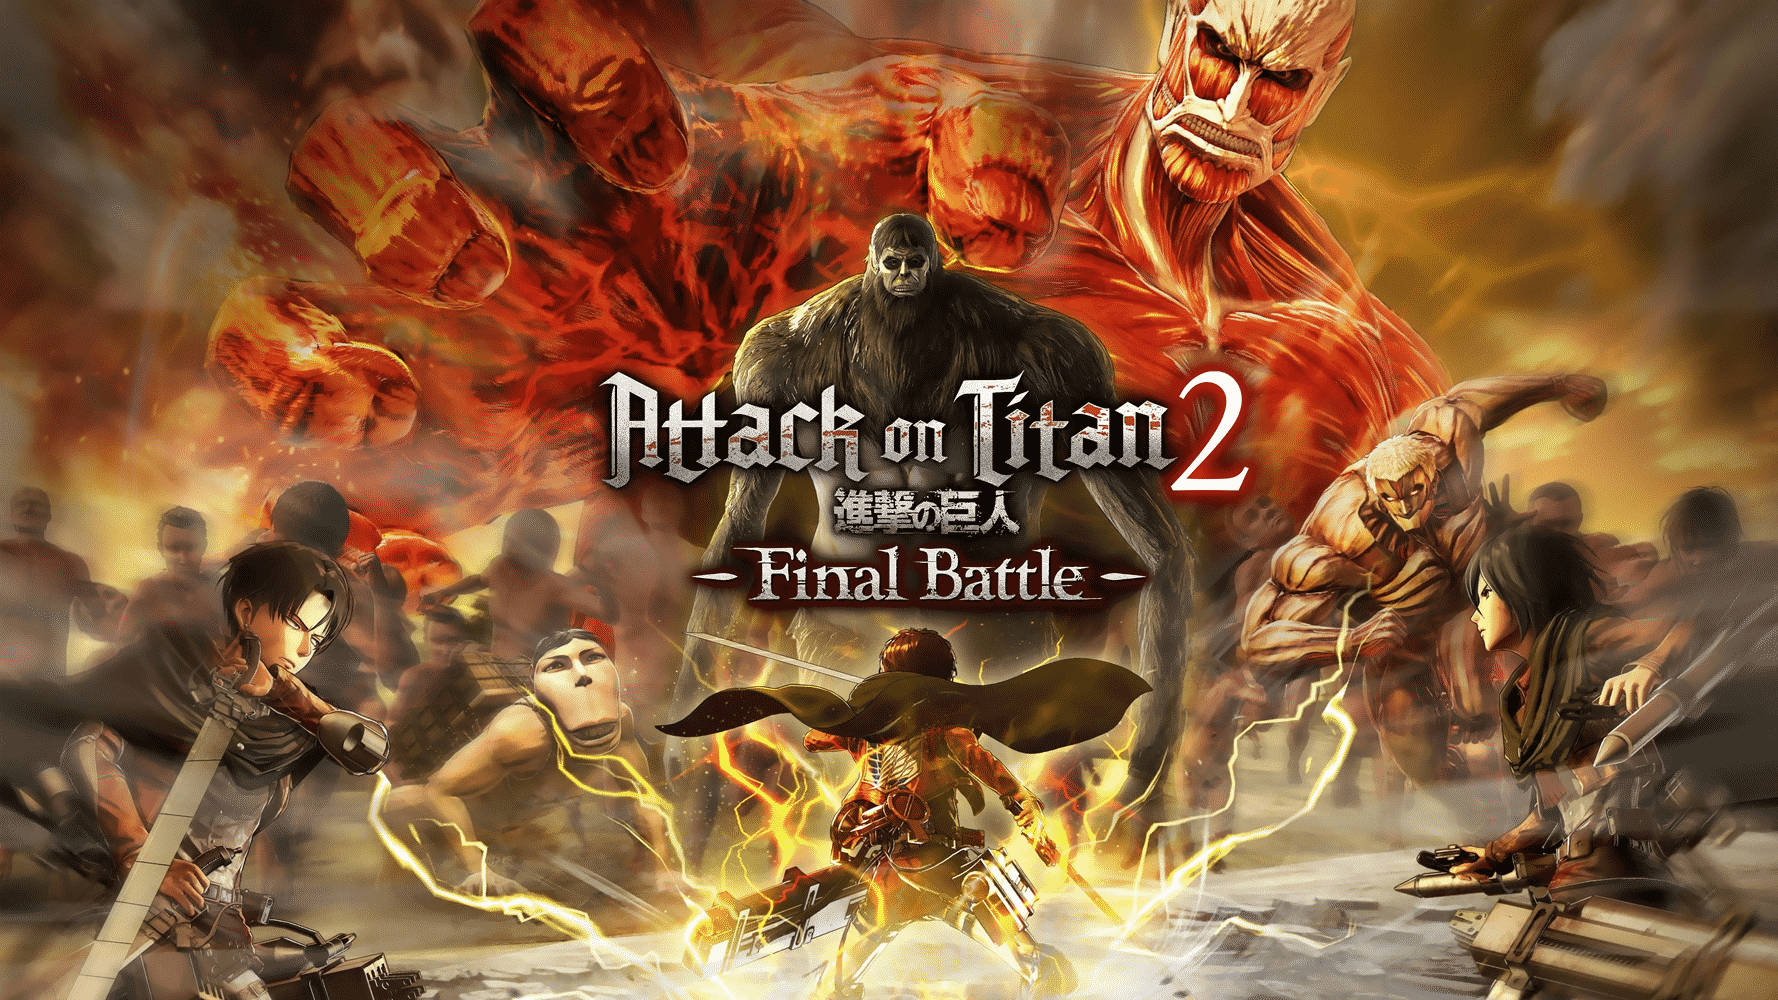 Attack on Titan 2 Final Battle Nintendo Switch Version Full Game Free Download